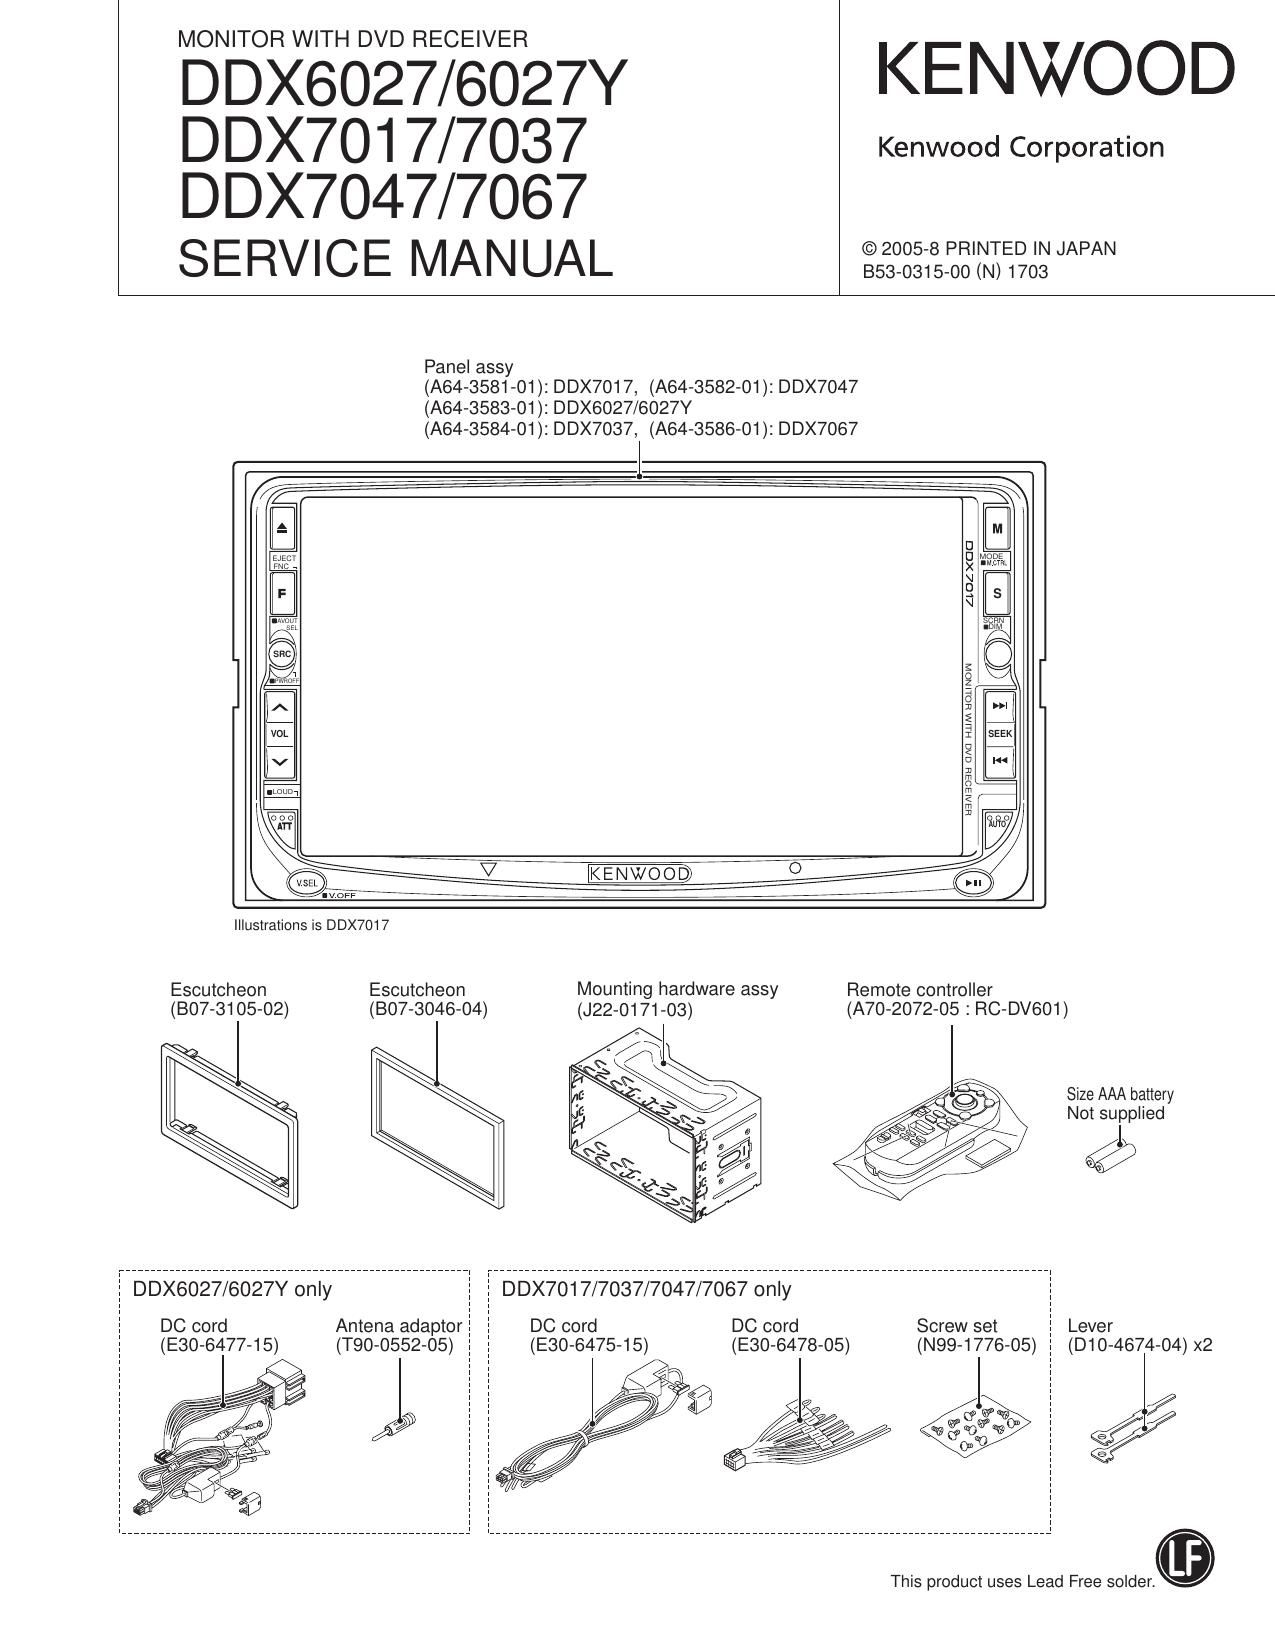 Kenwood DDX 7067 Service Manual